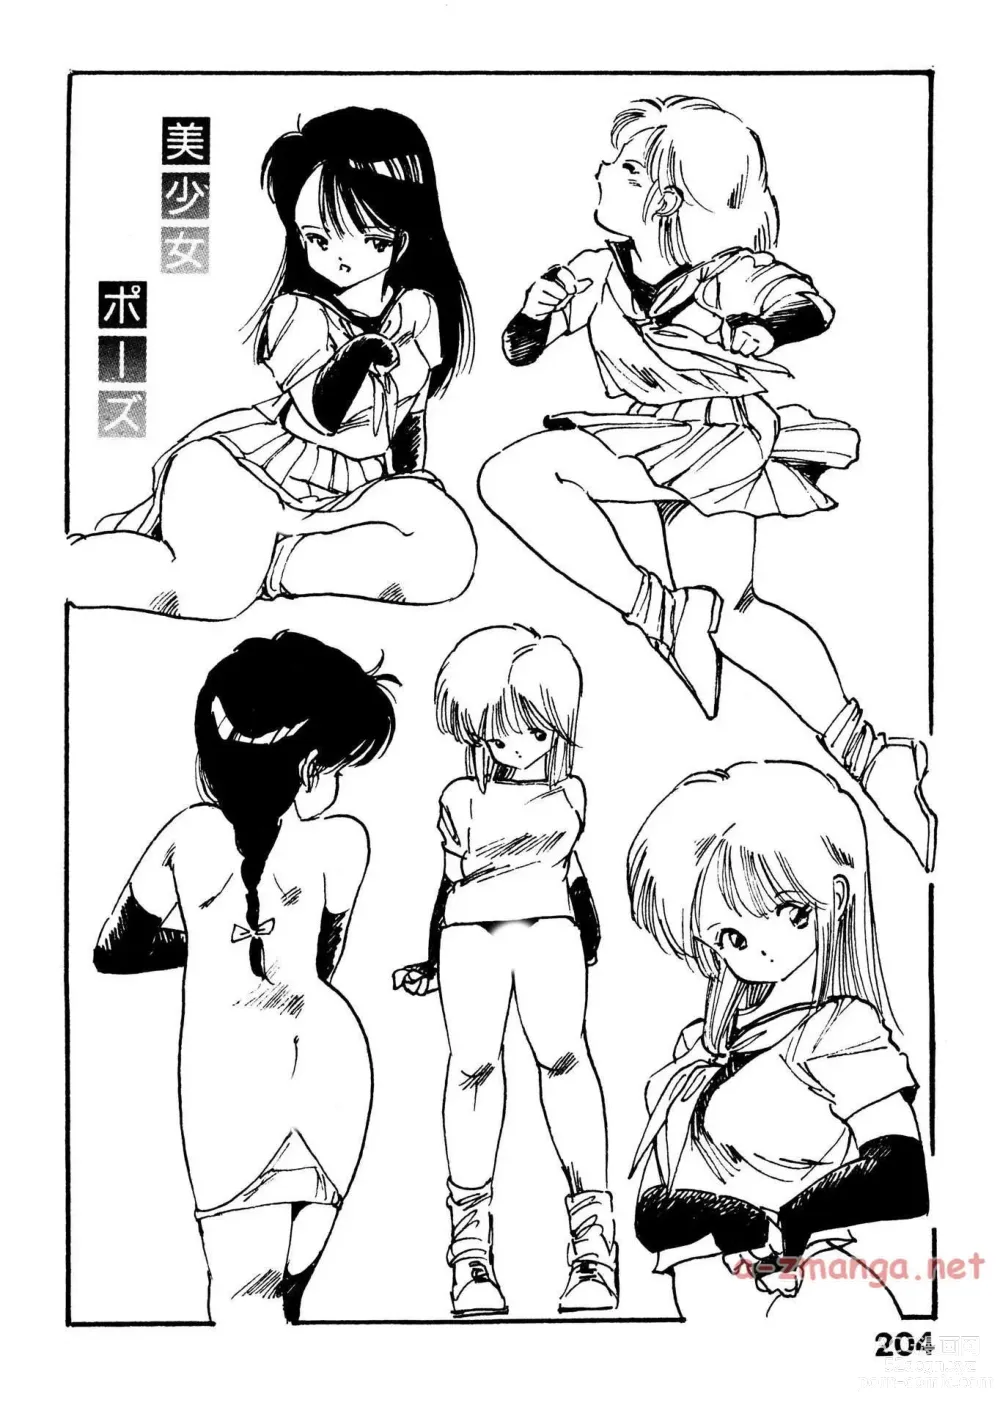 Page 204 of manga Bijo Hime Jigoku